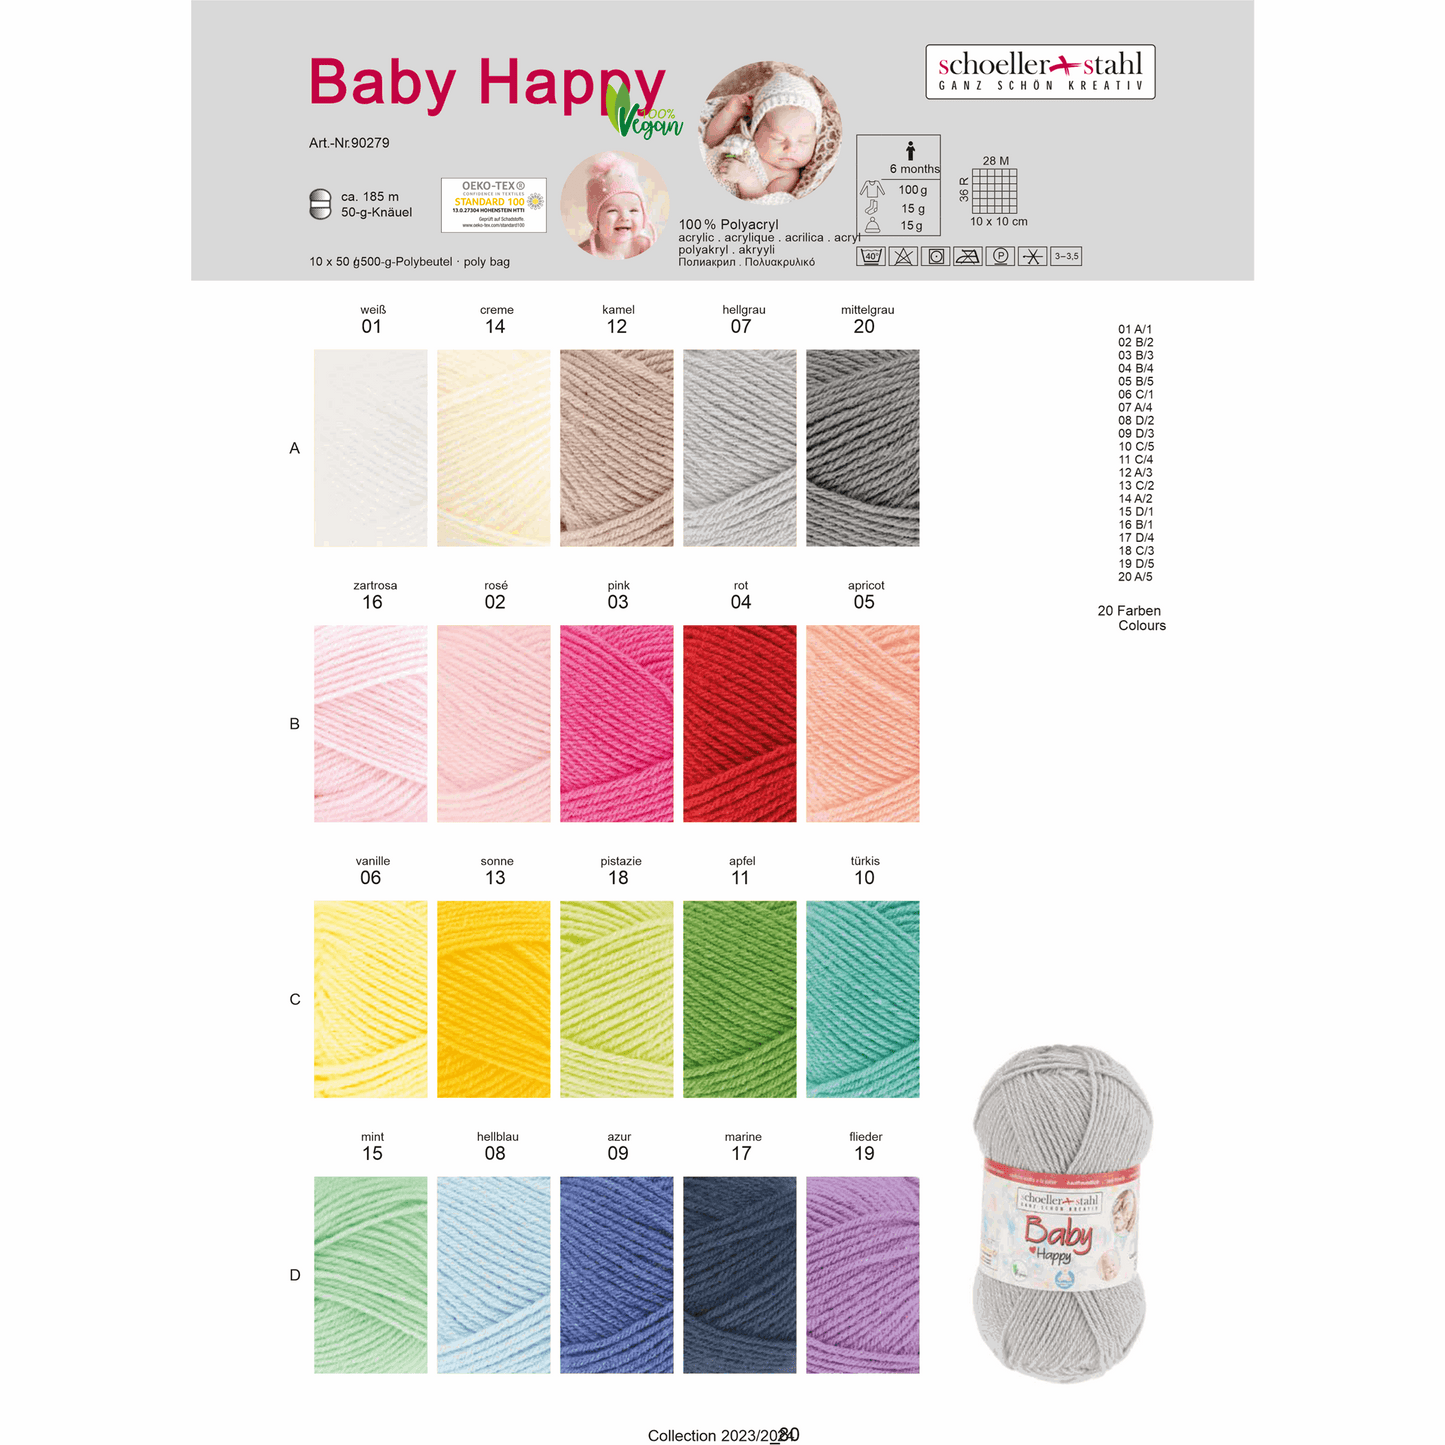 Baby happy 50g, 90279, Farbe 12, kamel